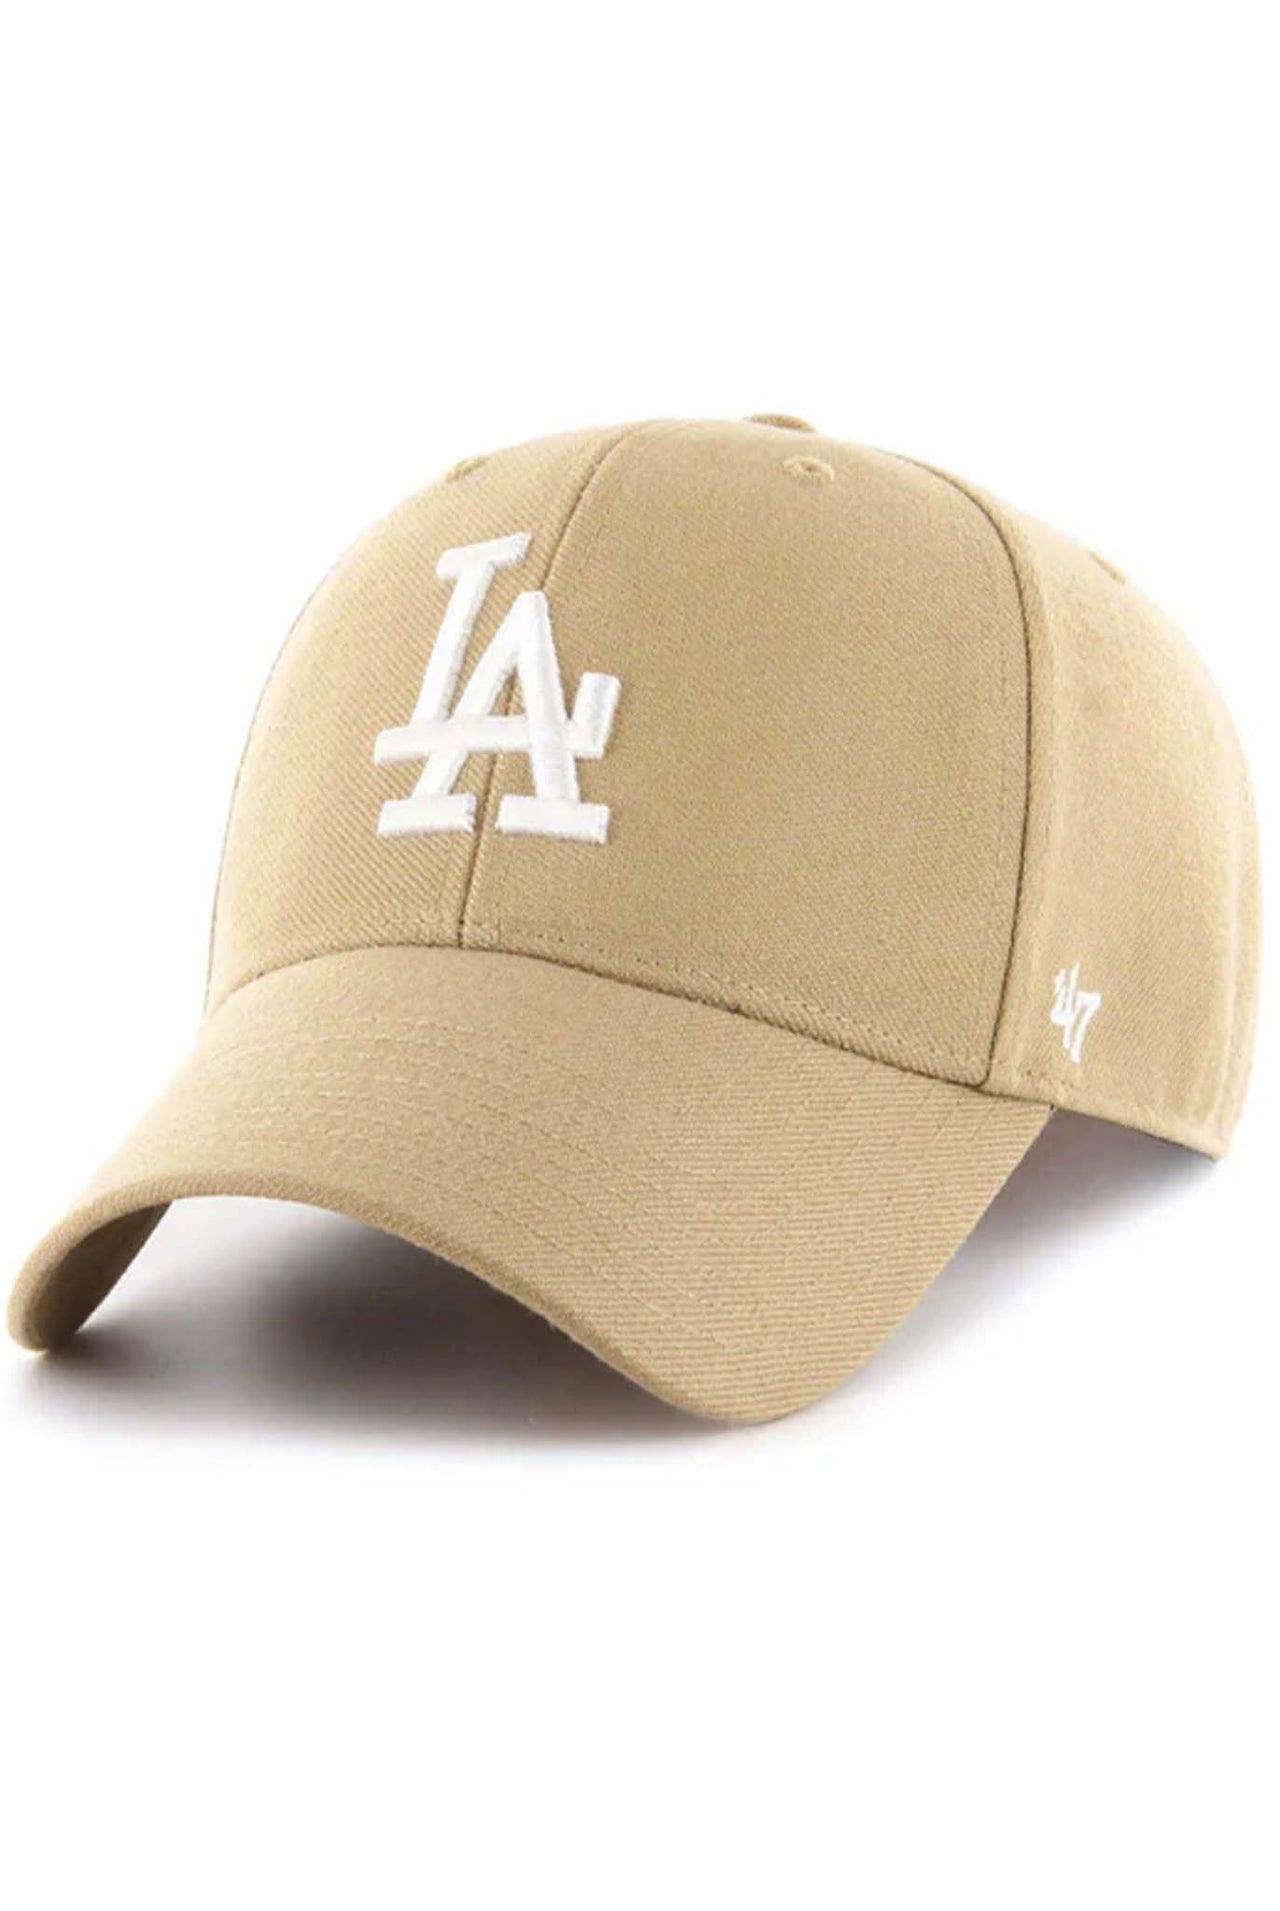 Gorra 47 Los Angeles Dodgers Beige